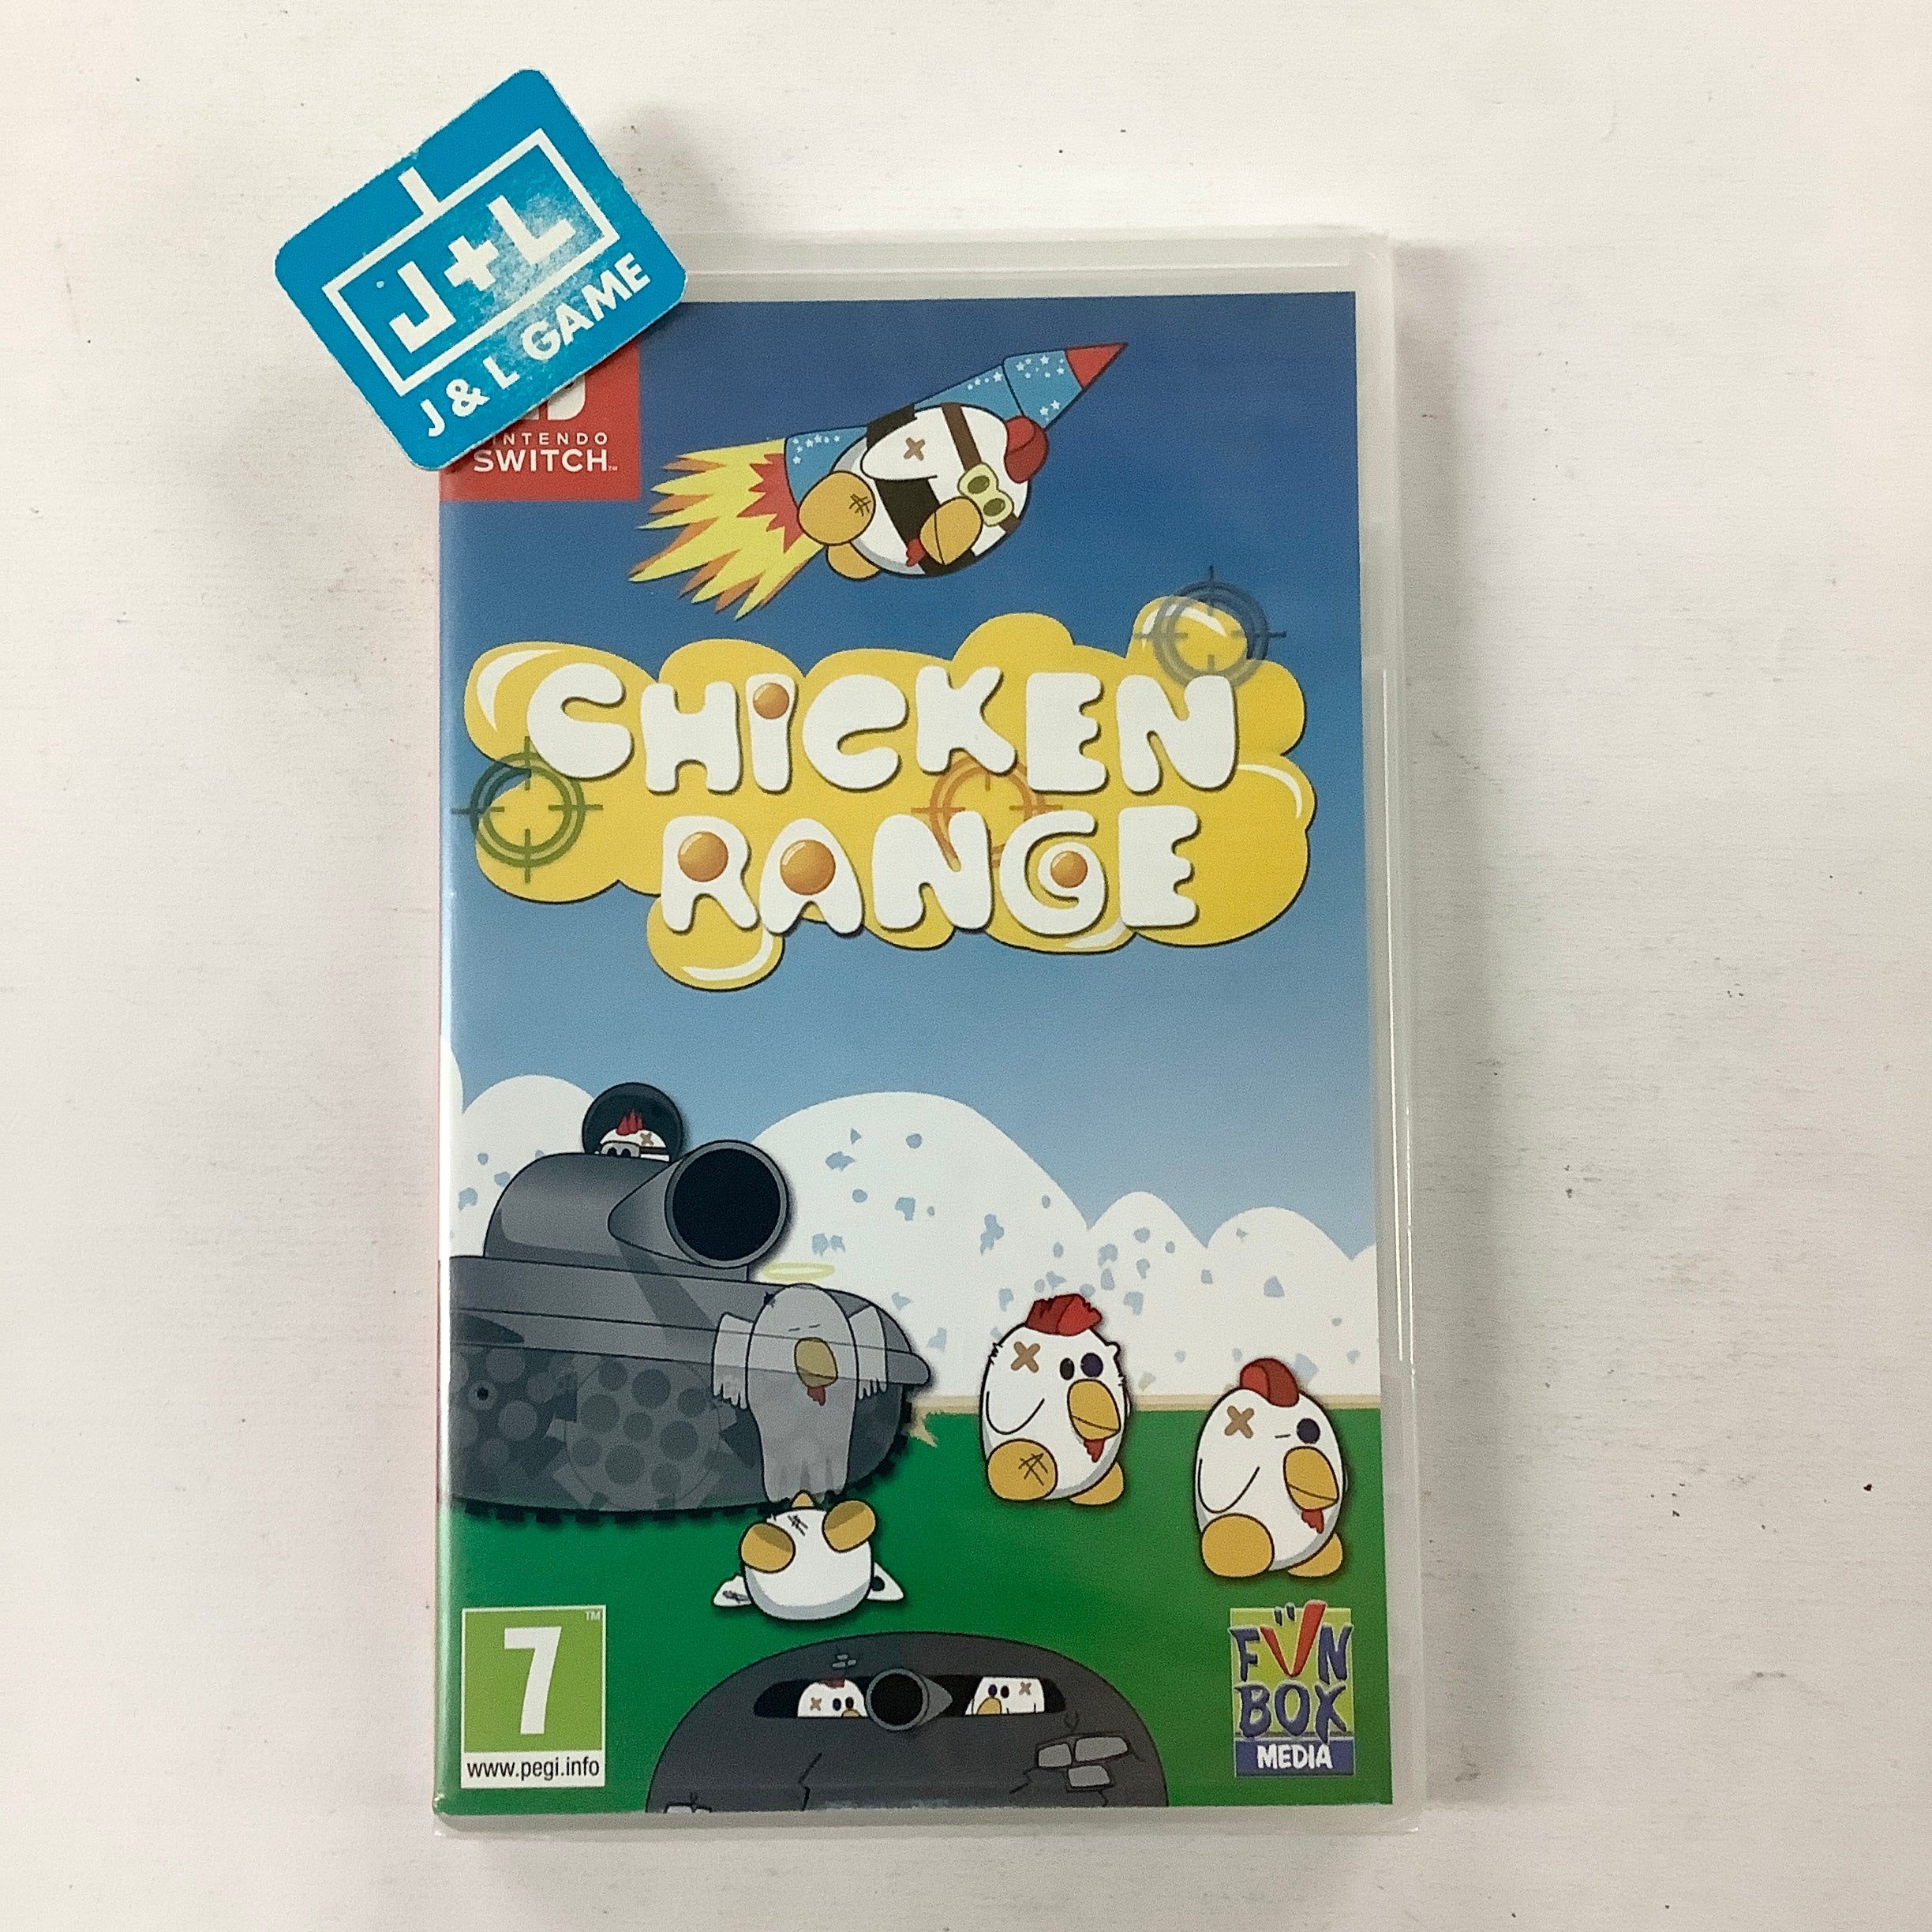 Chicken Range - (NSW) Nintendo Switch (European Import) Video Games Funbox Media   